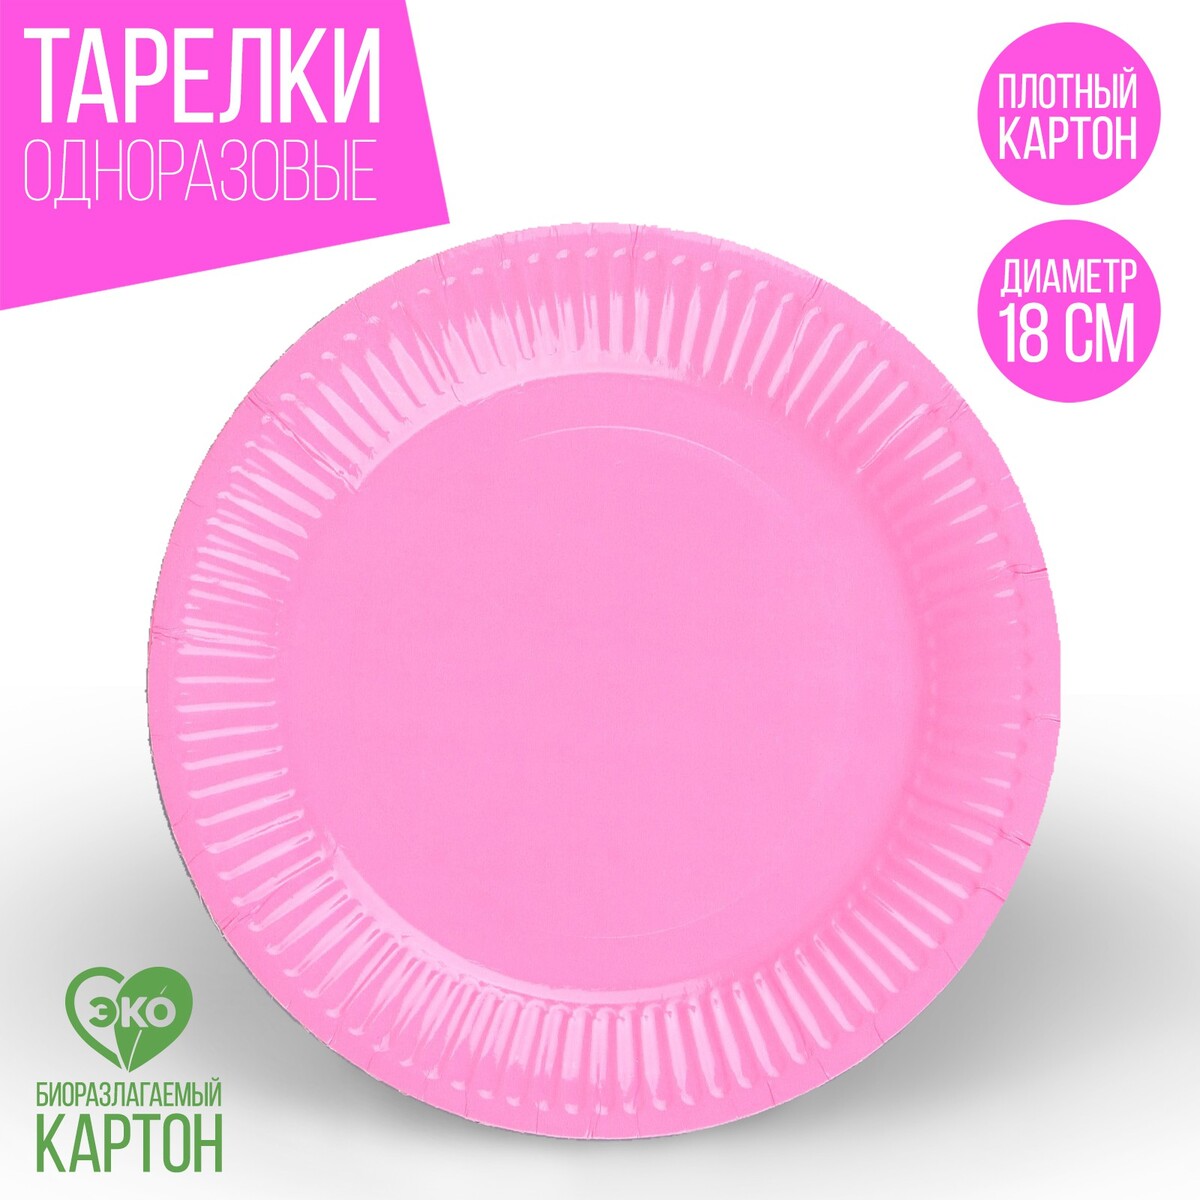 Тарелка одноразовая бумажная однотонная, цвет розовый 18 см, набор 10 штук тарелка одноразовая бумажная однотонная голубой 18 см набор 10 штук